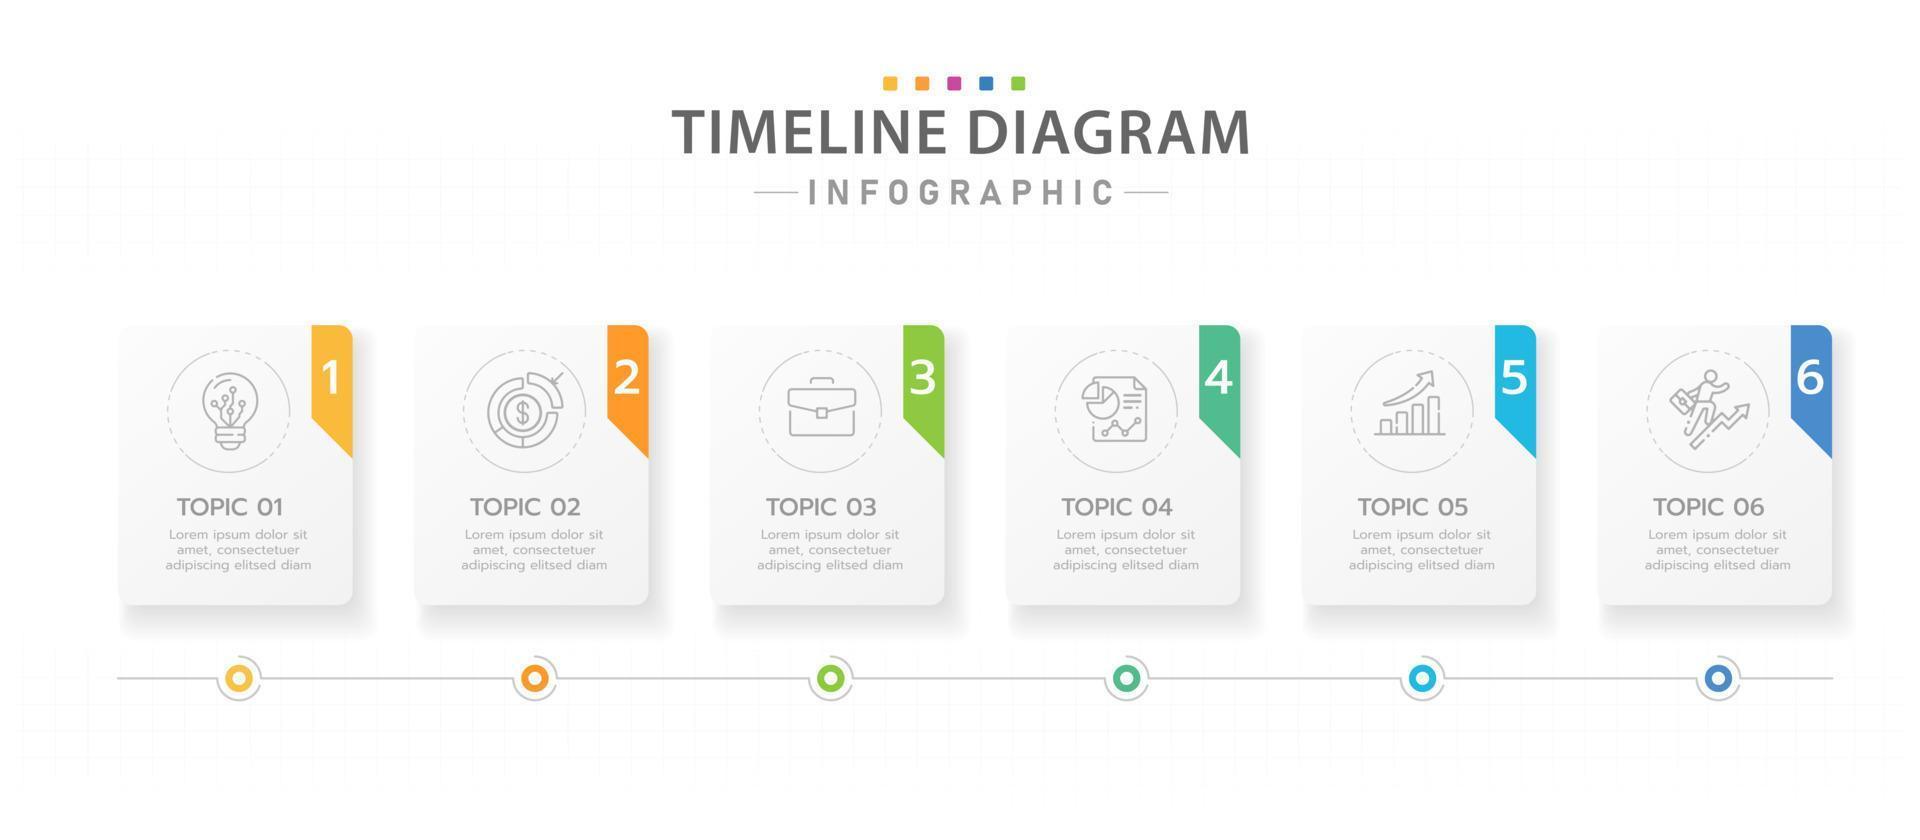 plantilla infográfica para negocios. Diagrama de línea de tiempo moderno de 6 pasos con temas de título, infografía vectorial de presentación. vector